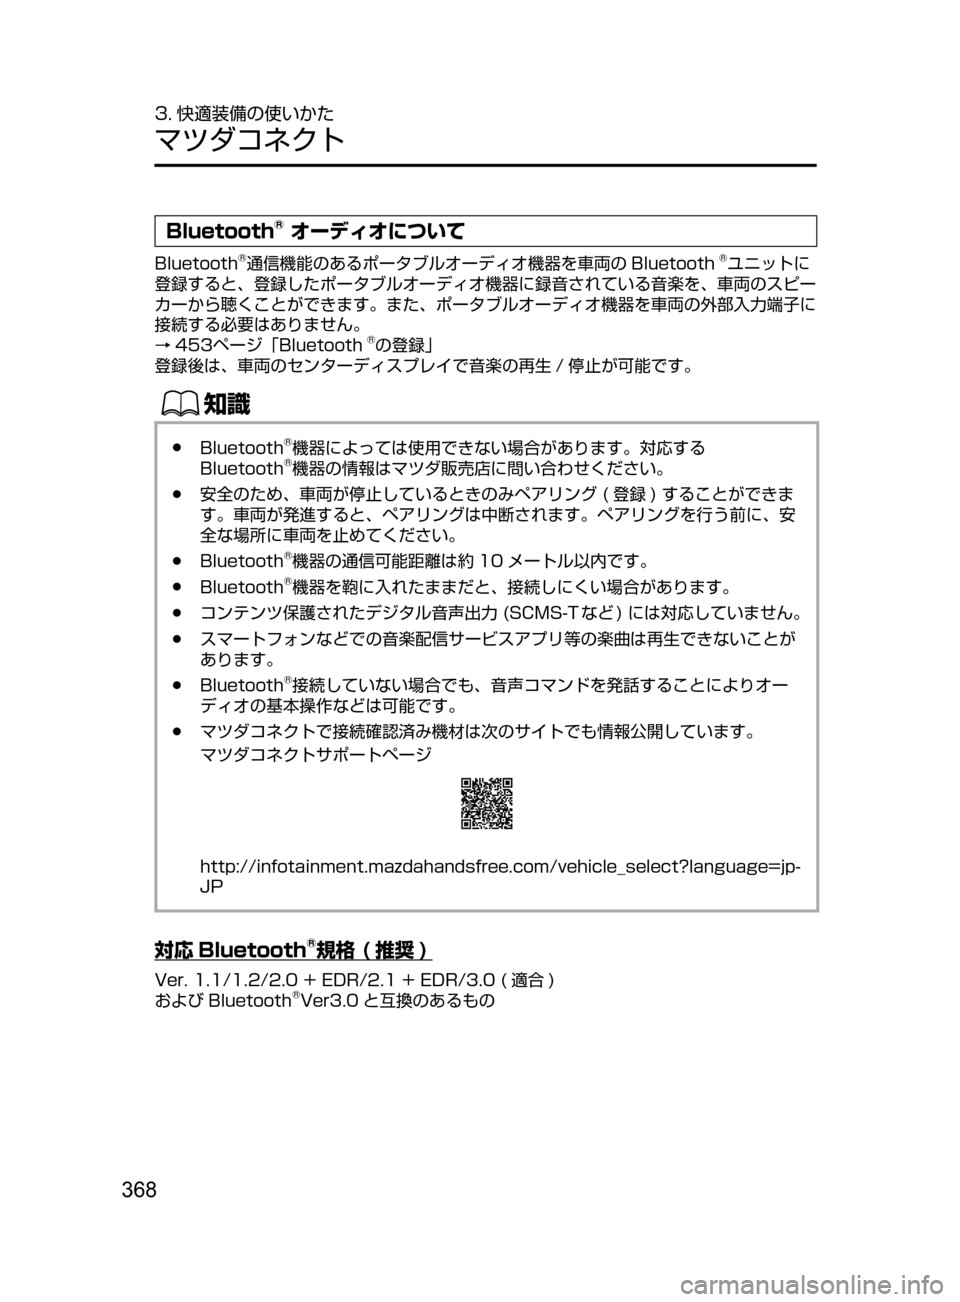 MAZDA MODEL ATENZA 2016  アテンザ｜取扱説明書 (in Japanese) 368
3. 快適装備の使いかた
マツダコネクト
Bluetooth® オーディオについて
Bluetooth®通信機能のあるポータブルオーディオ機器を車両の Bluetooth®ユニッ